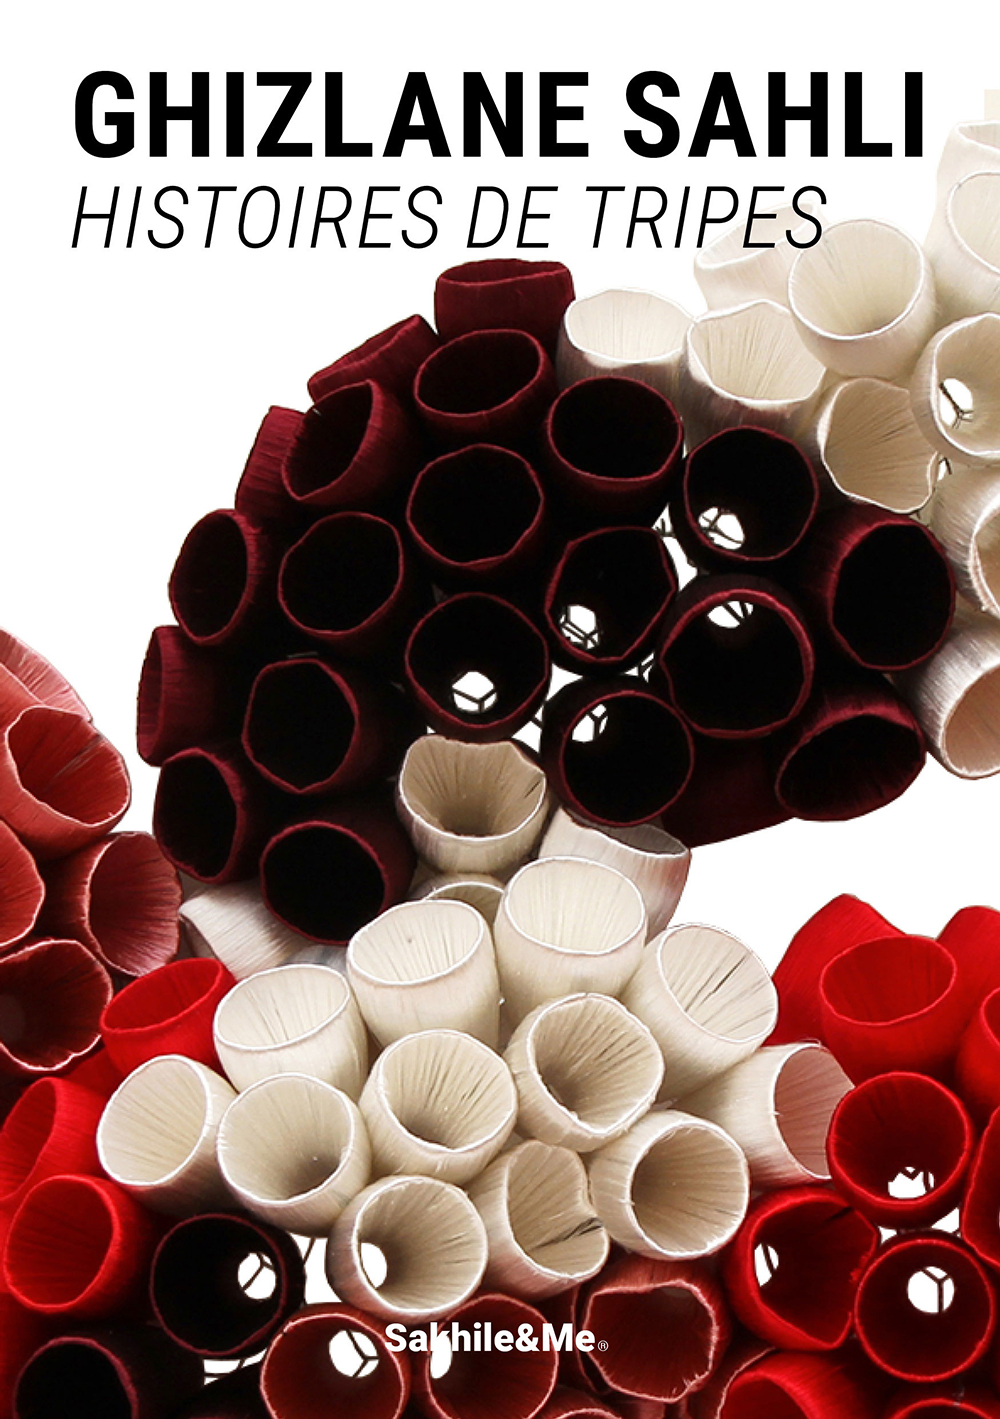 Ghizlane Sahli: Histoires de Tripes (Catalogue)